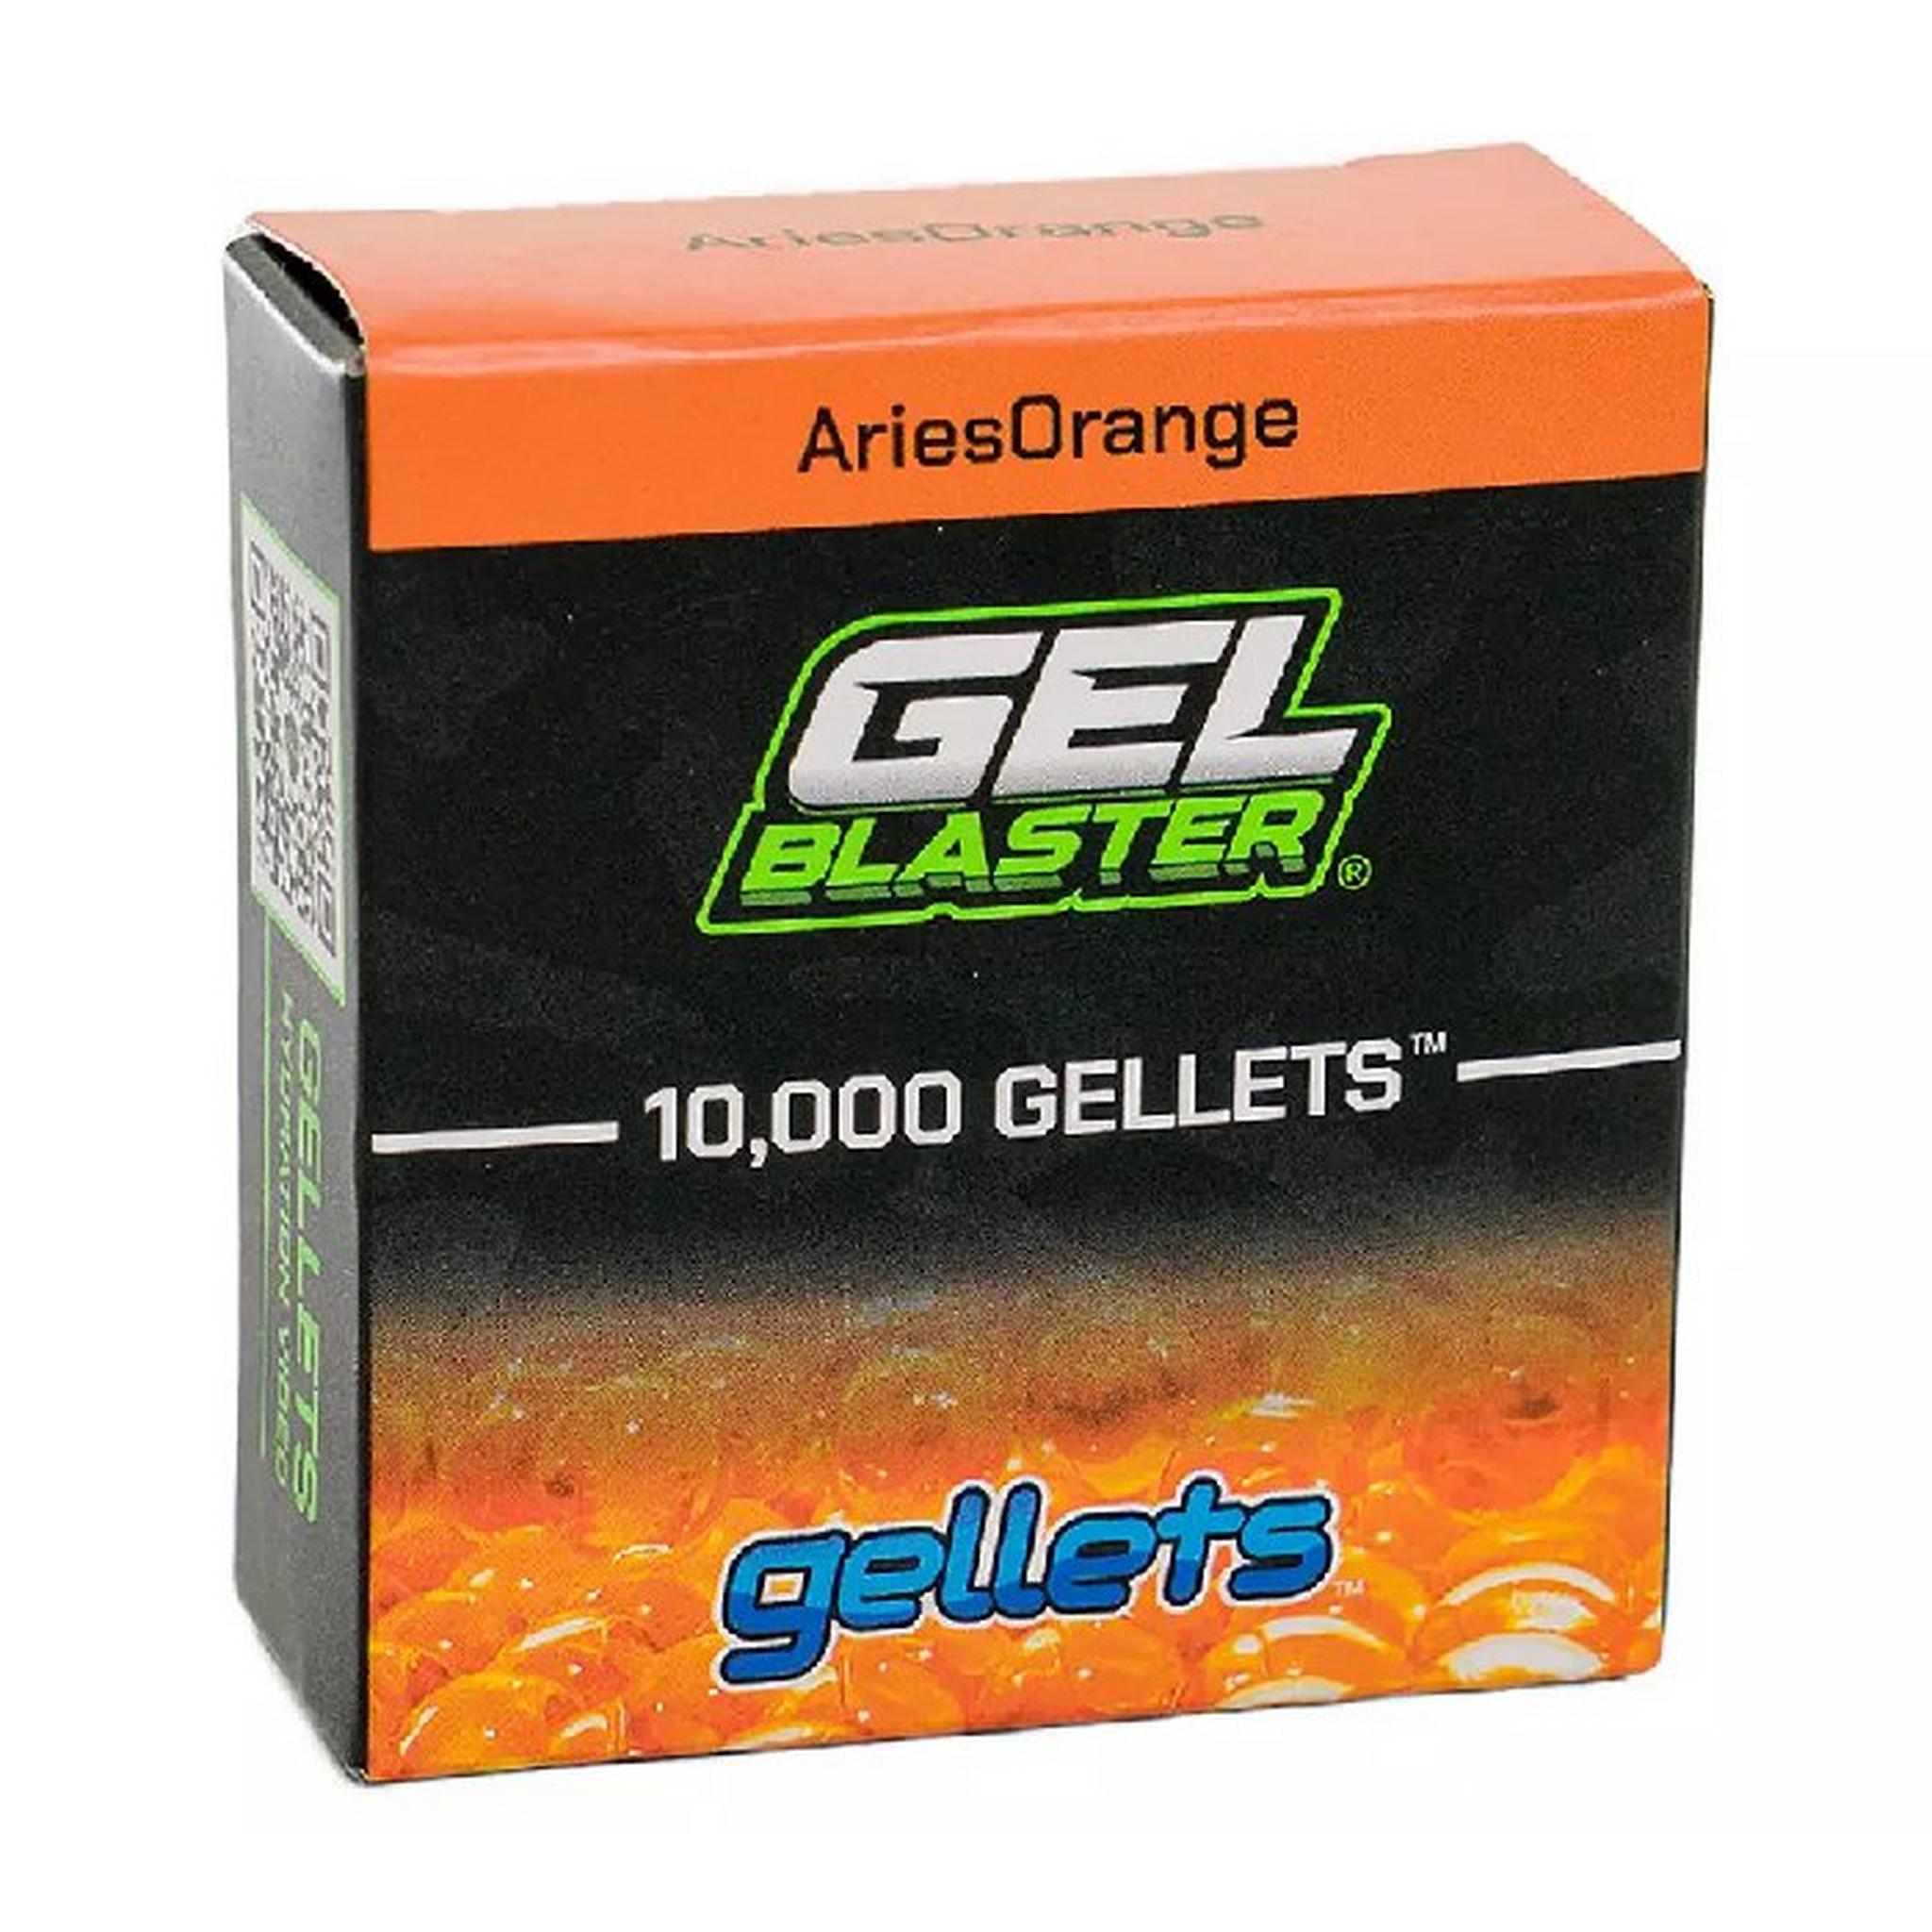 GEL Blaster 10,000 Pellets Gellets Blaster, GBGL1002-5L – Orange